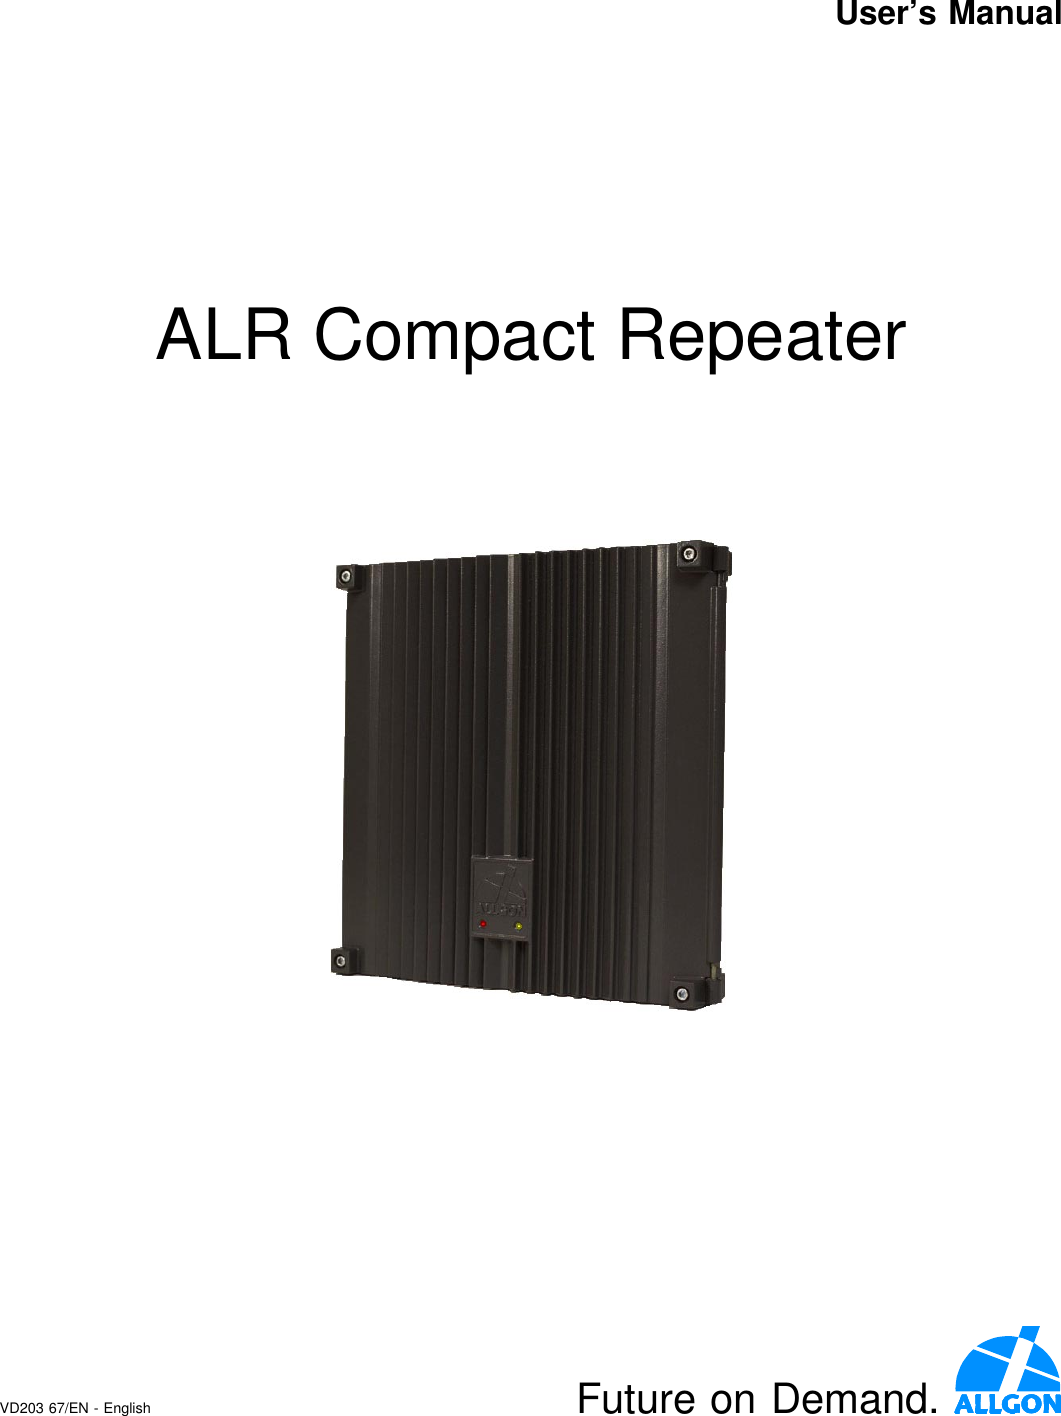 User’s ManualALR Compact RepeaterVD203 67/EN - English Future on Demand. 